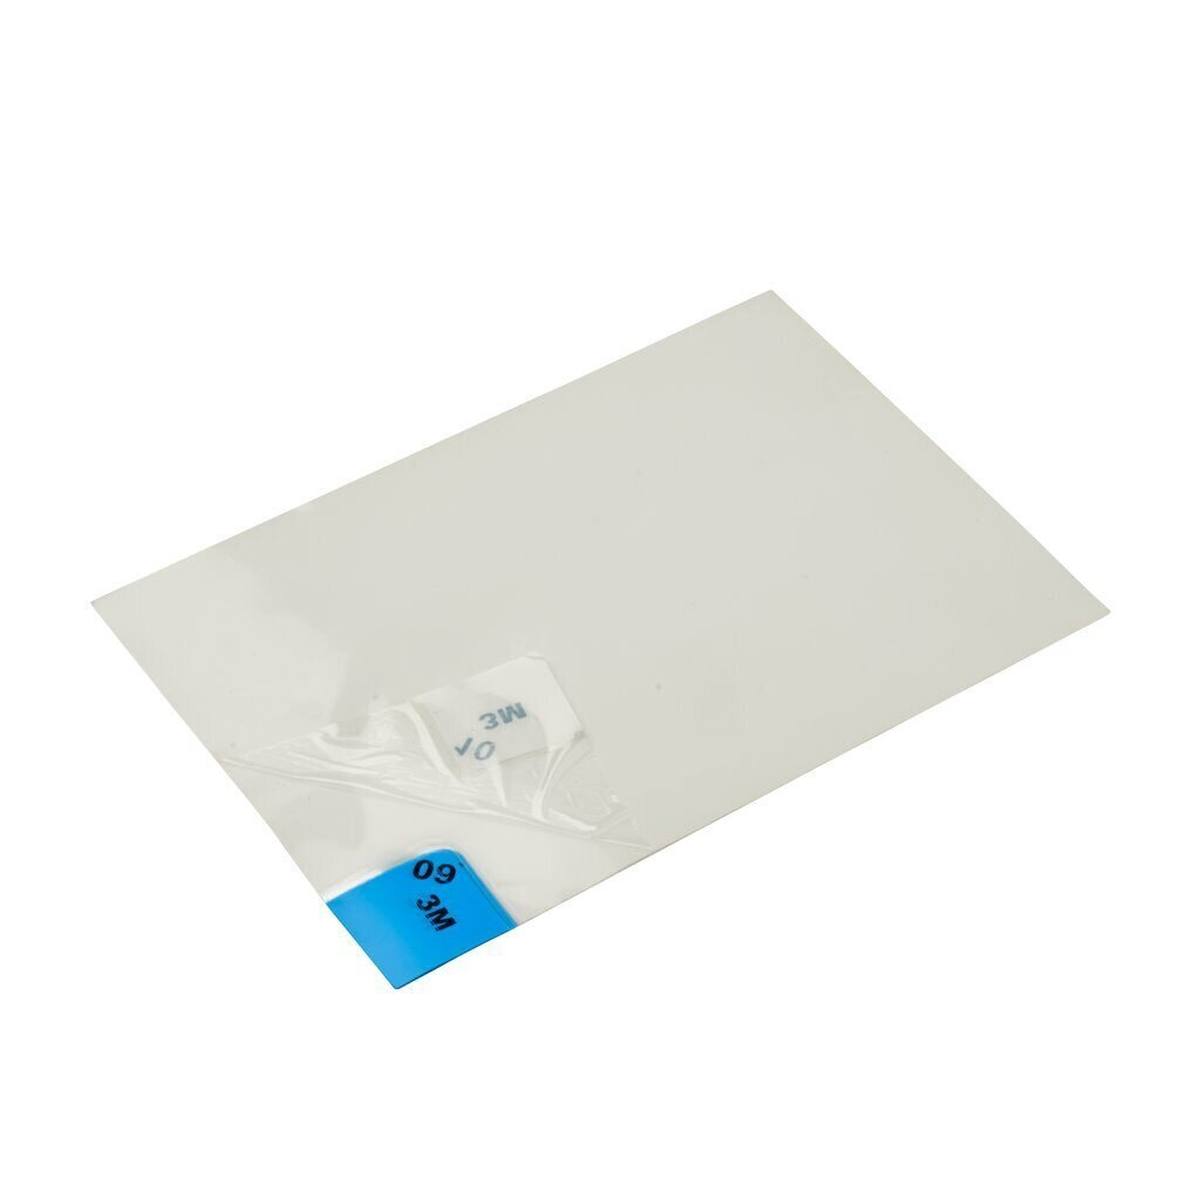 3M 4300 Nomad fijnstof kleefmat, wit, 1,15m x 0,6m, 40st transparante polyethyleen lagen